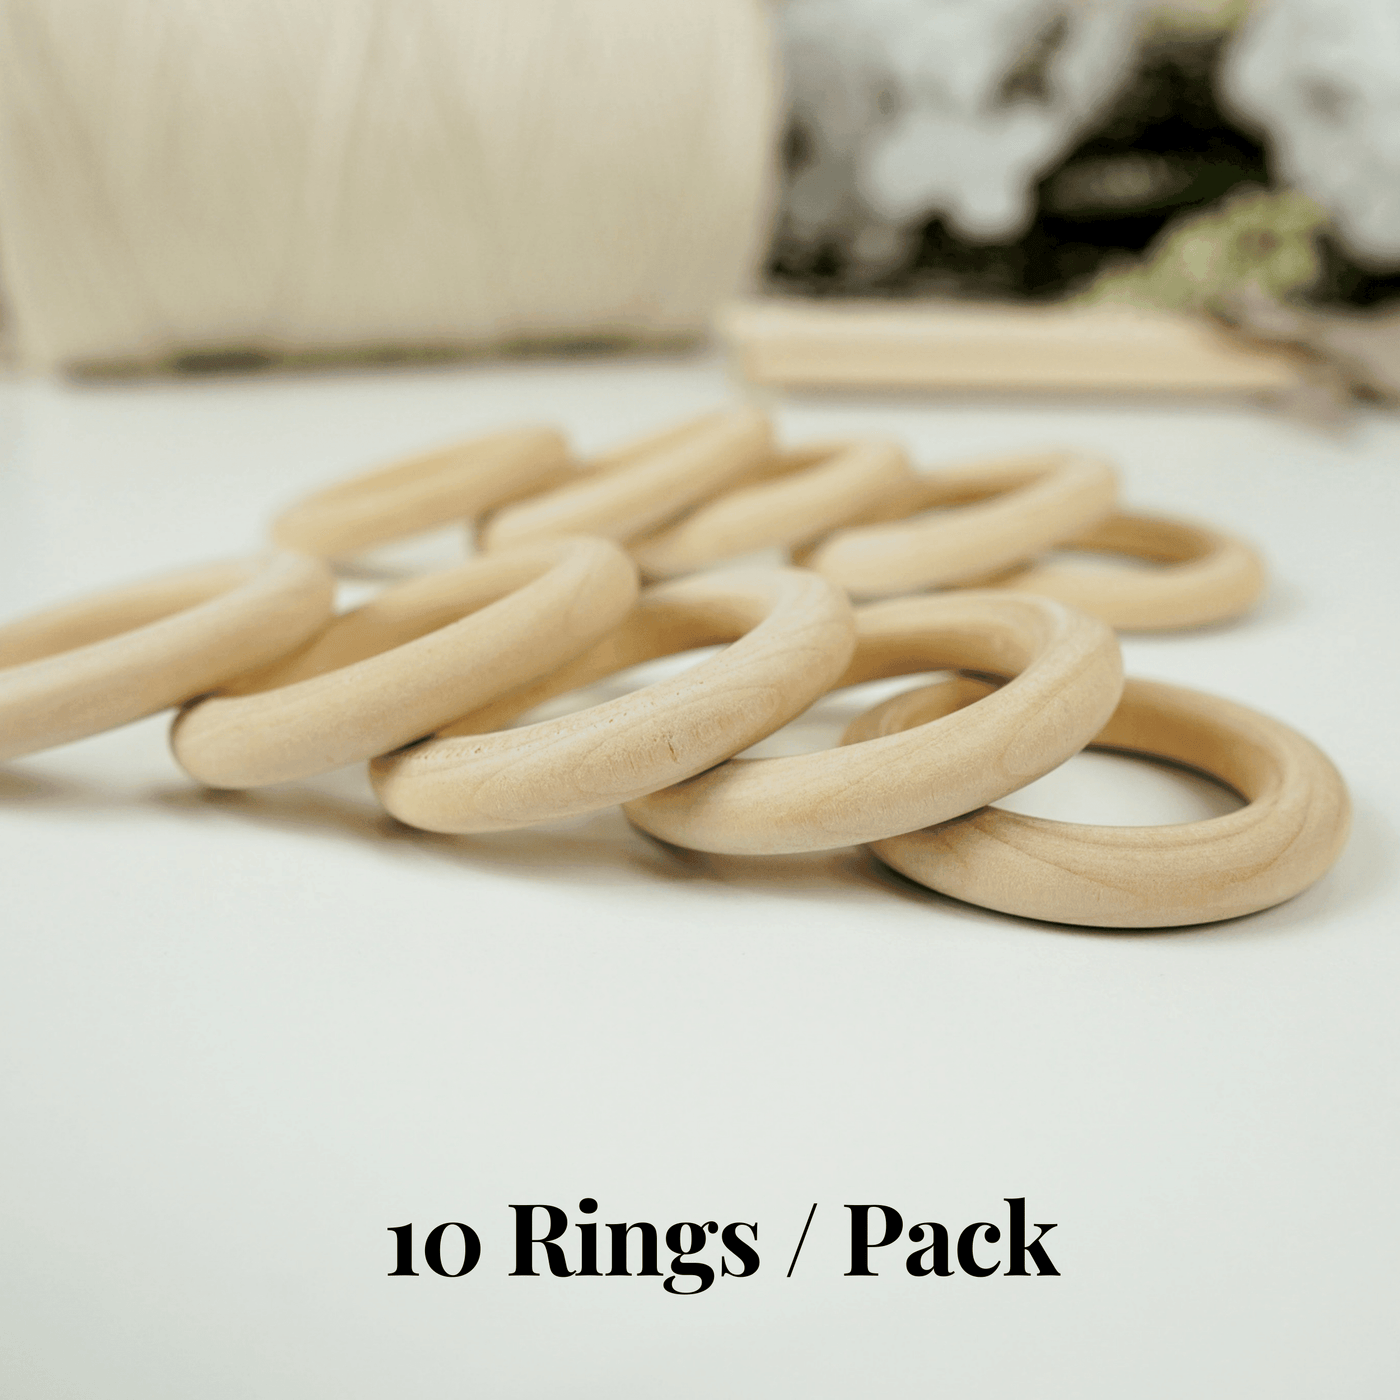 Bochiknot Macrame  Macrame Accessories - 2 Wooden Rings (10pack)